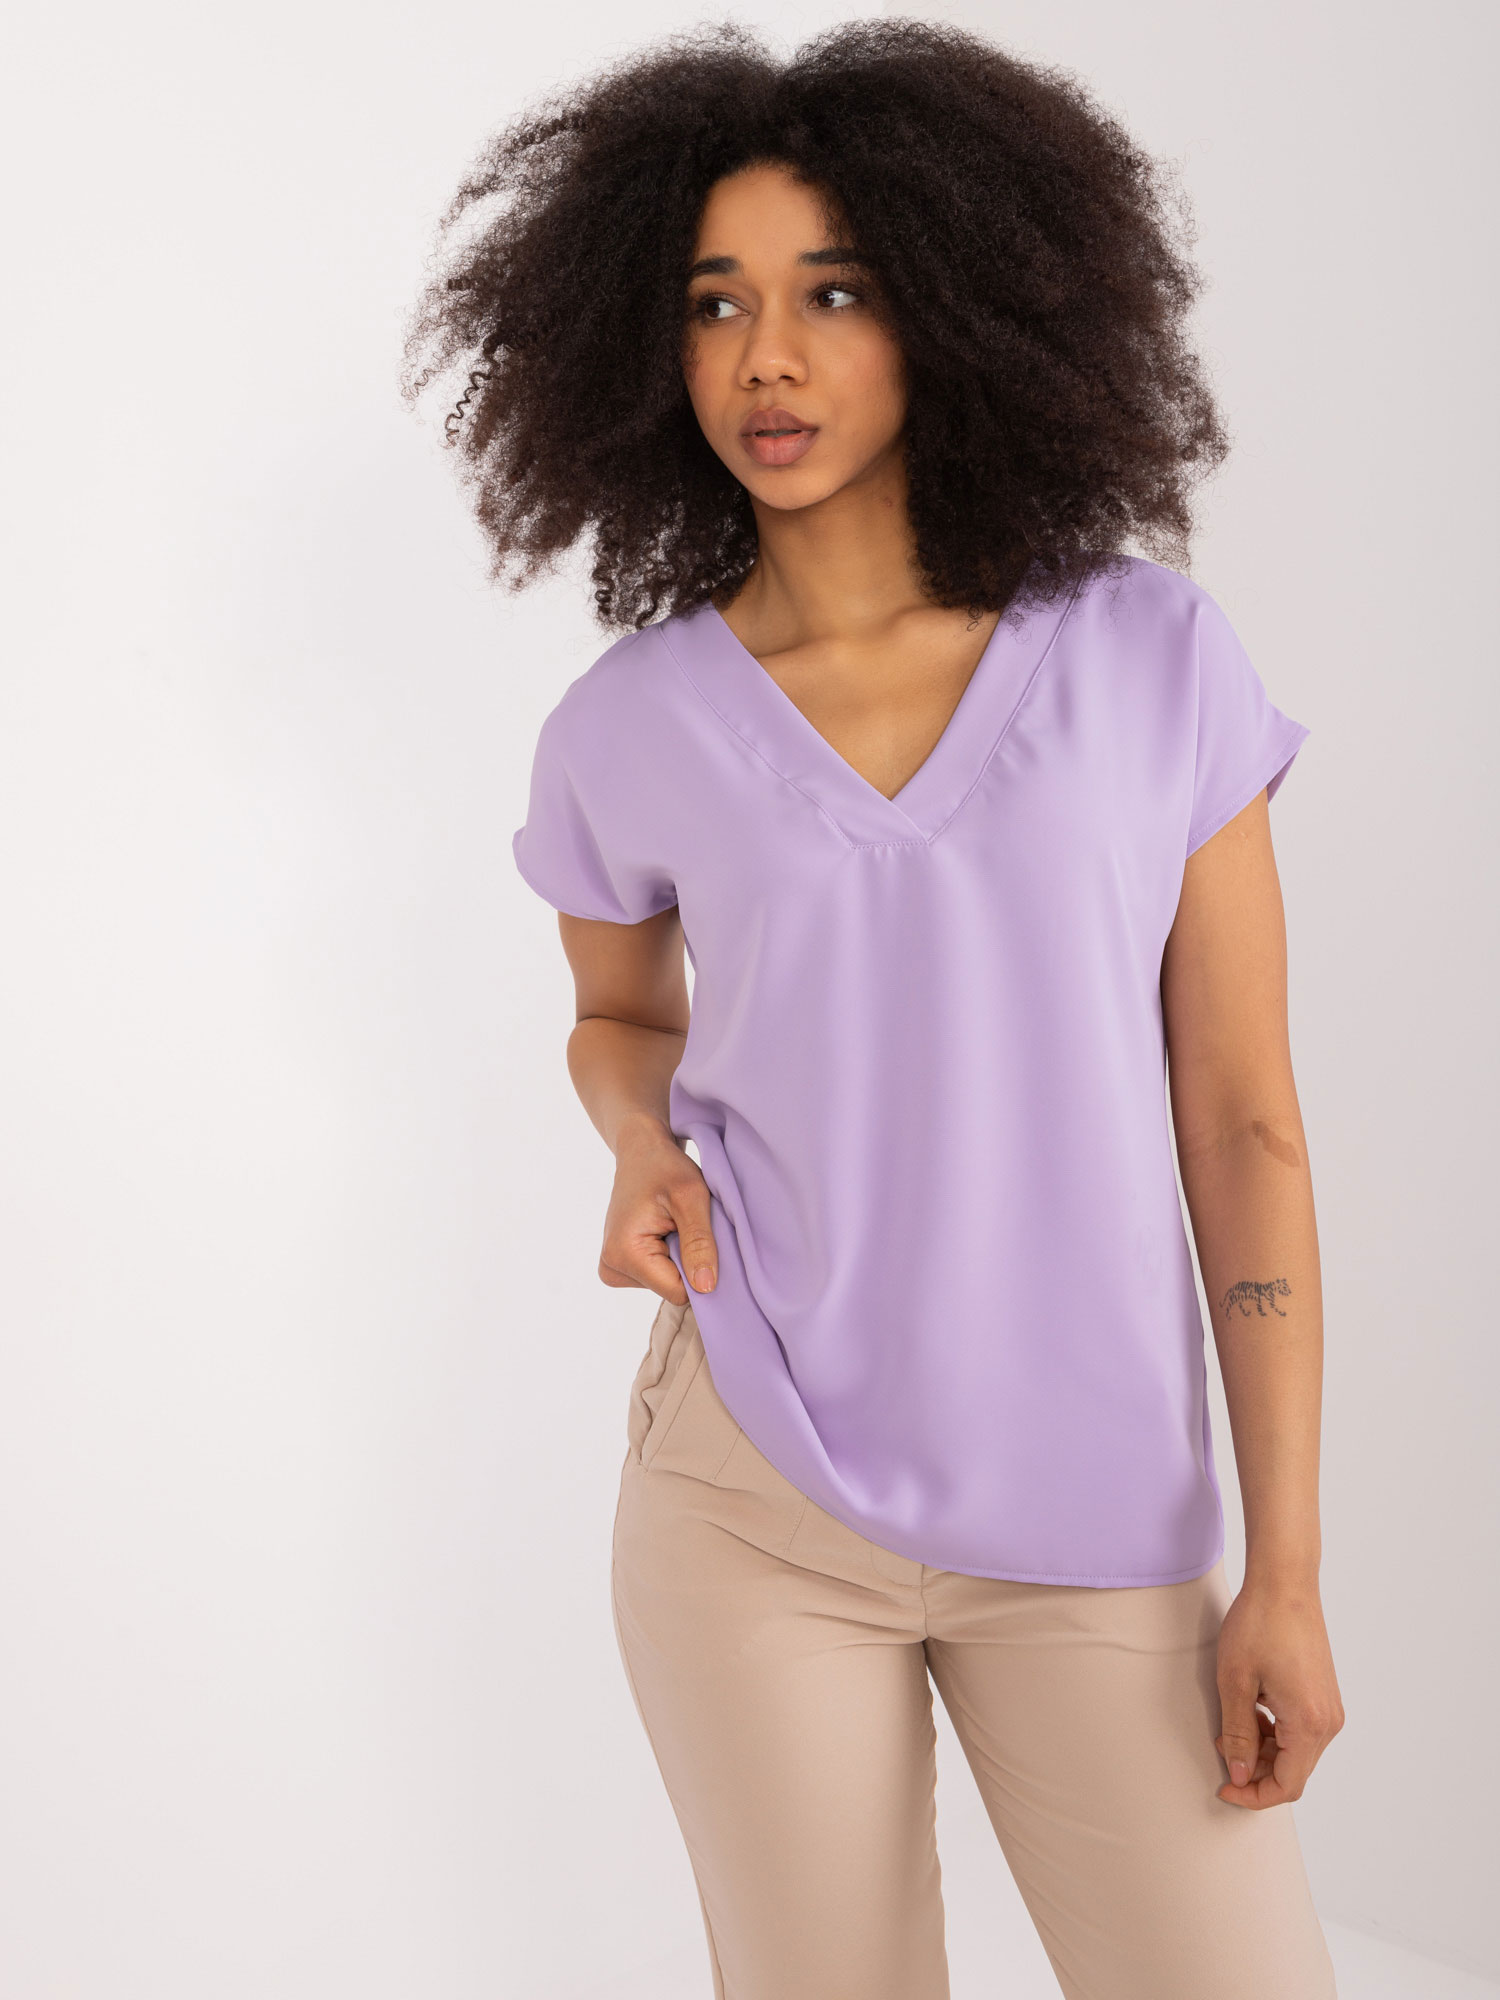 Purple blouse with a neckline BASIC FEEL GOOD